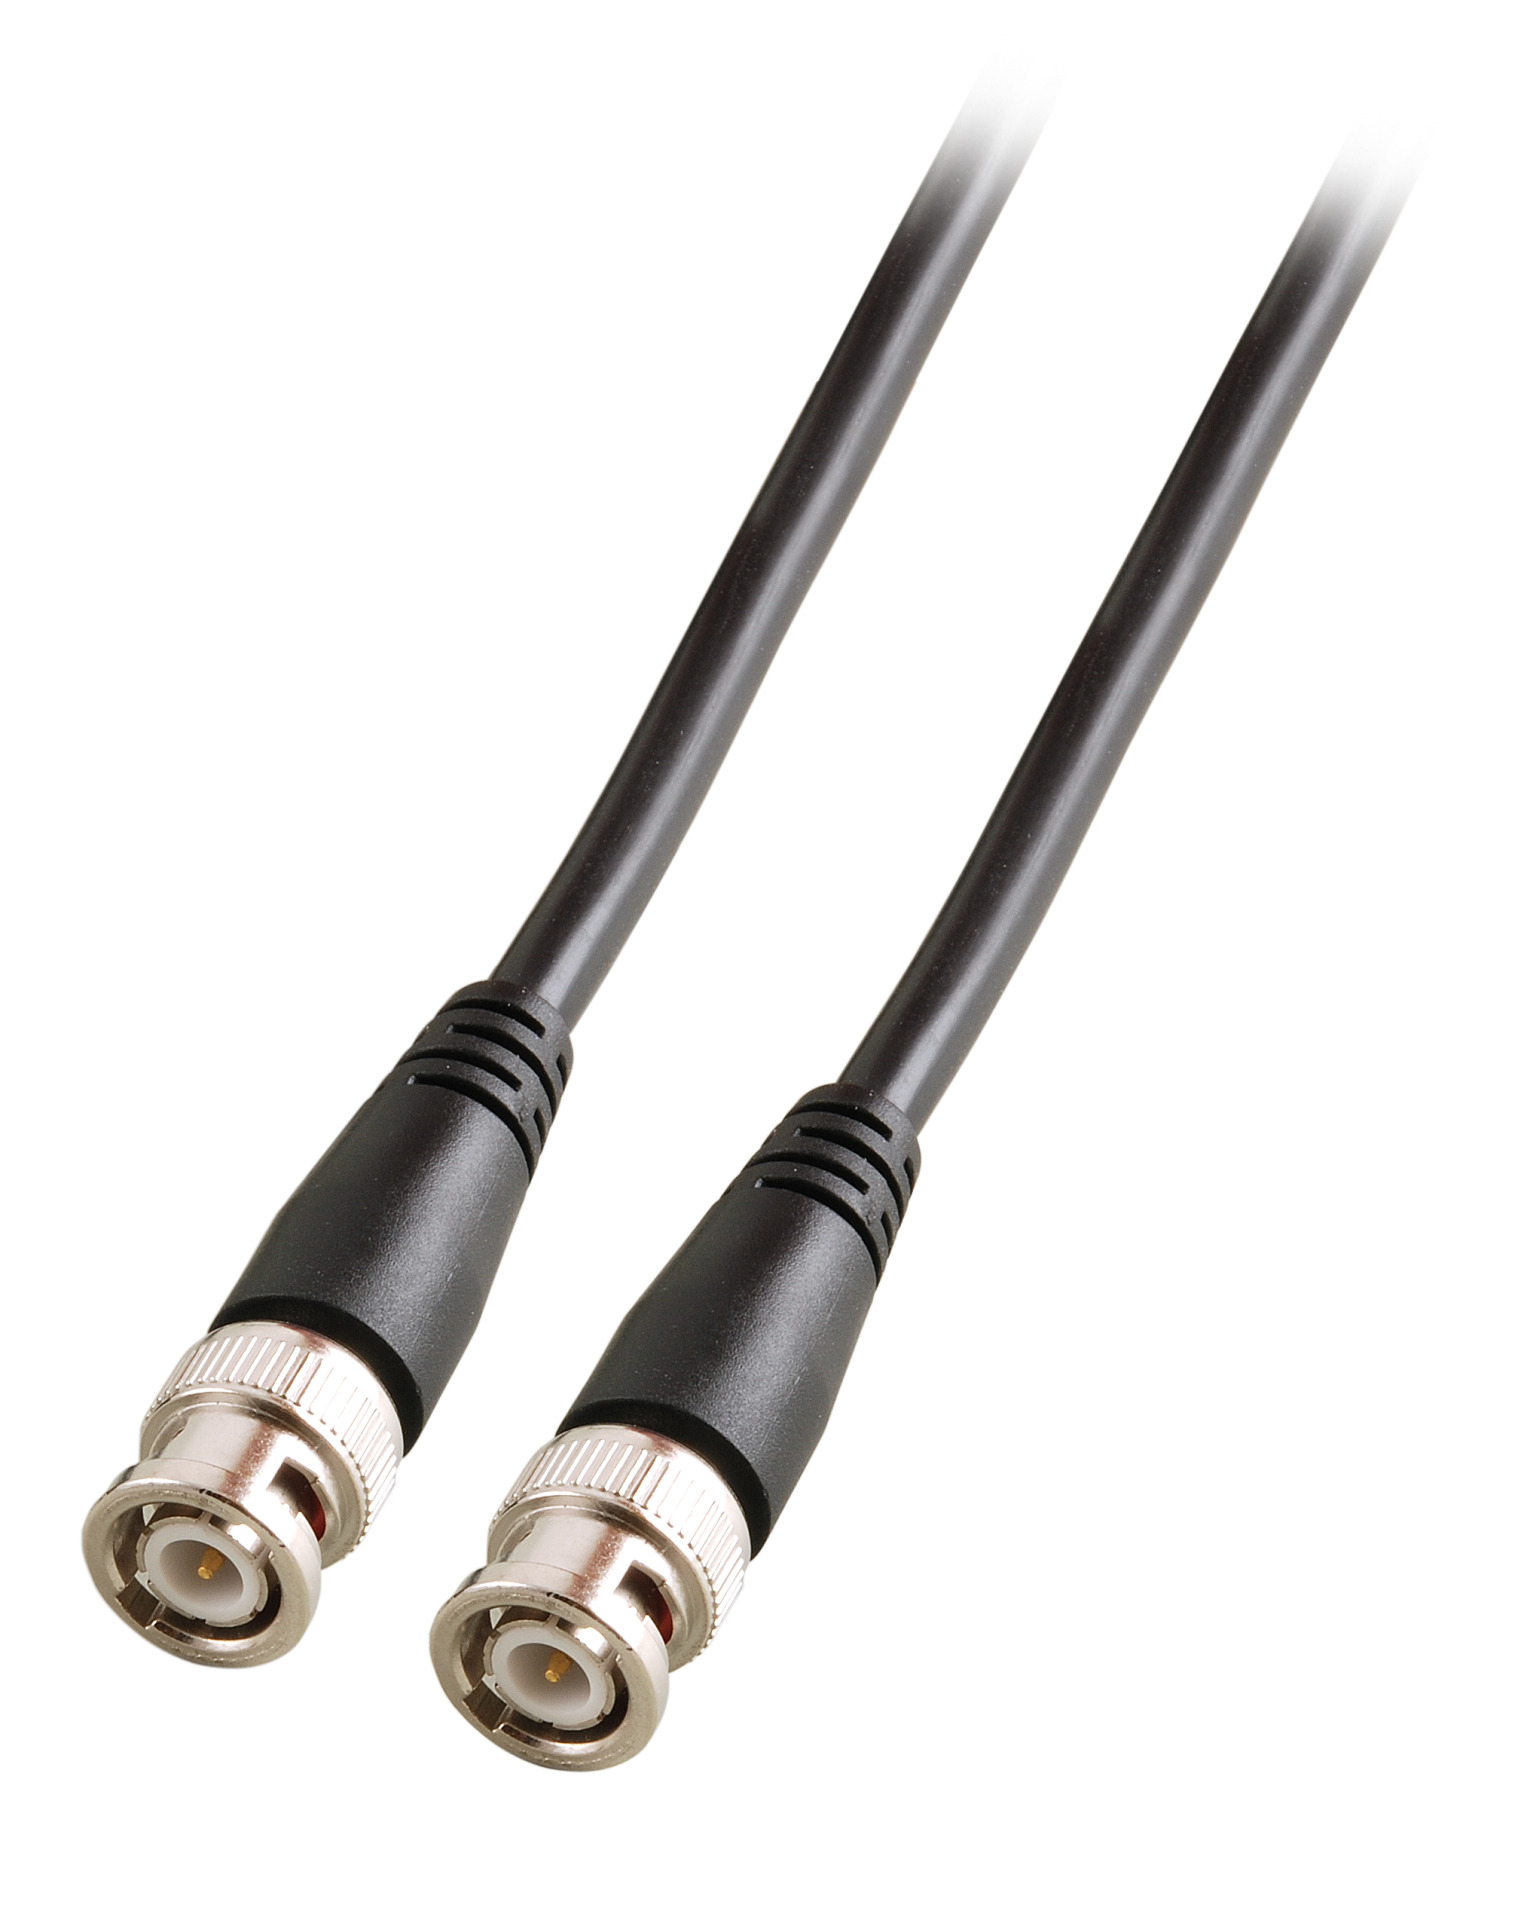 Koax-Kabel RG59 C/U 75Ohm,2 x Stecker gerade, 3,0m